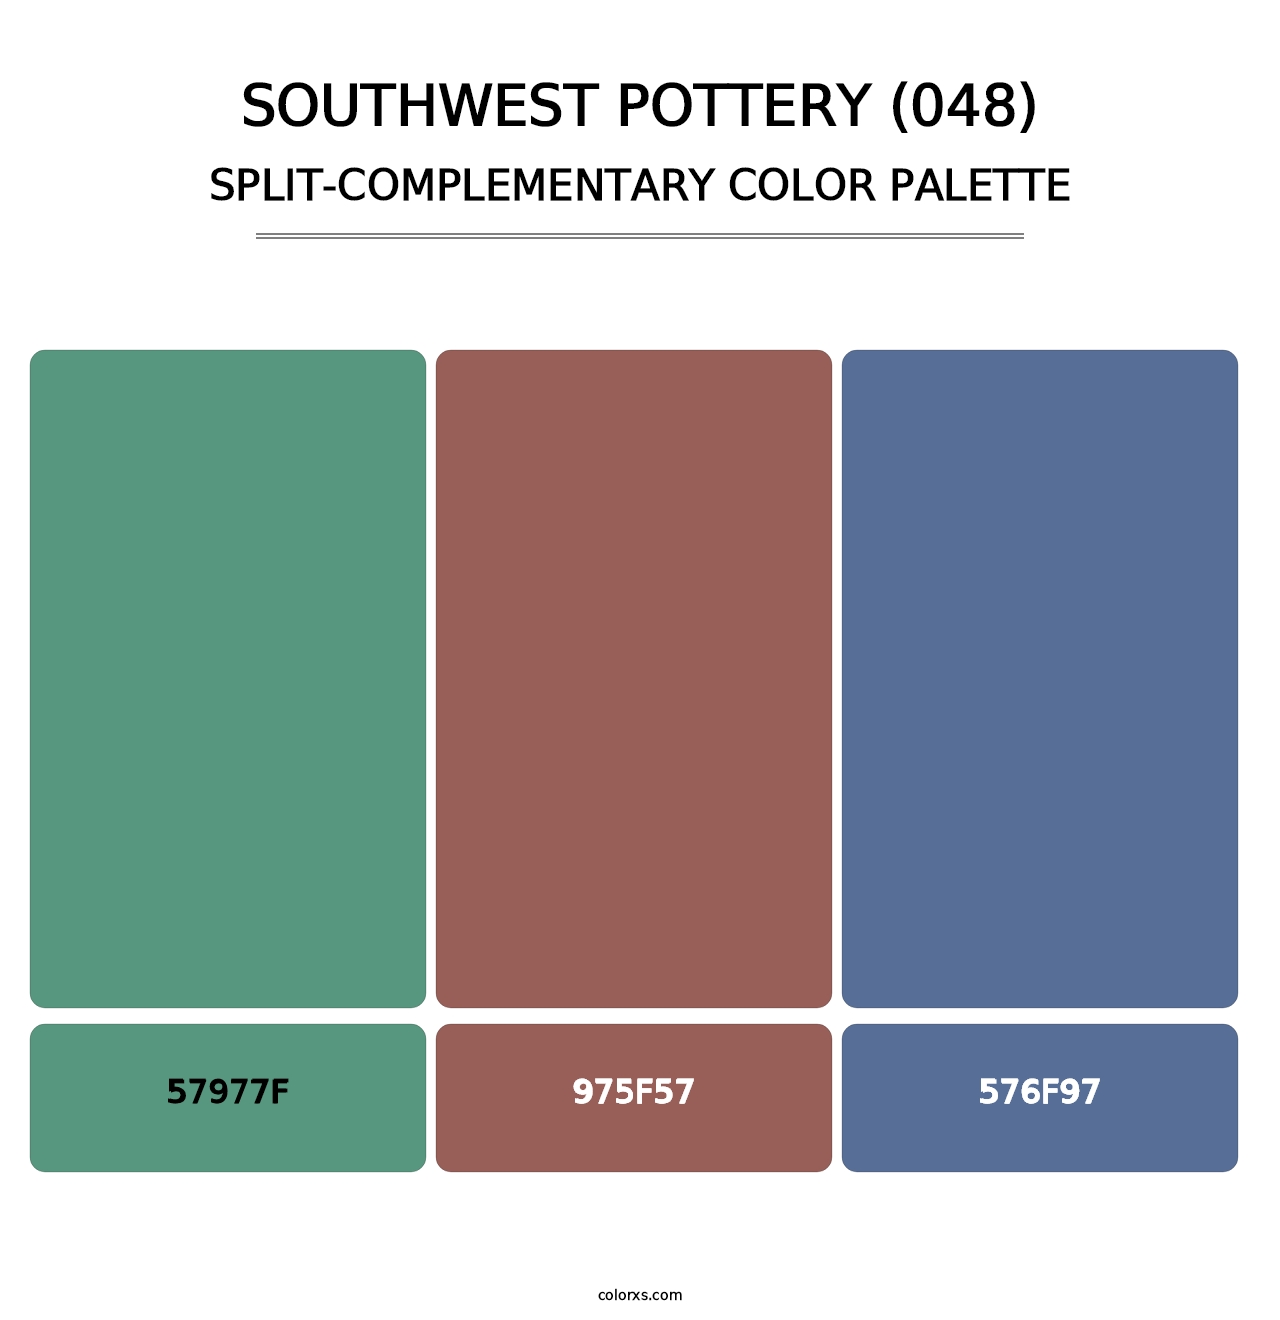 Southwest Pottery (048) - Split-Complementary Color Palette